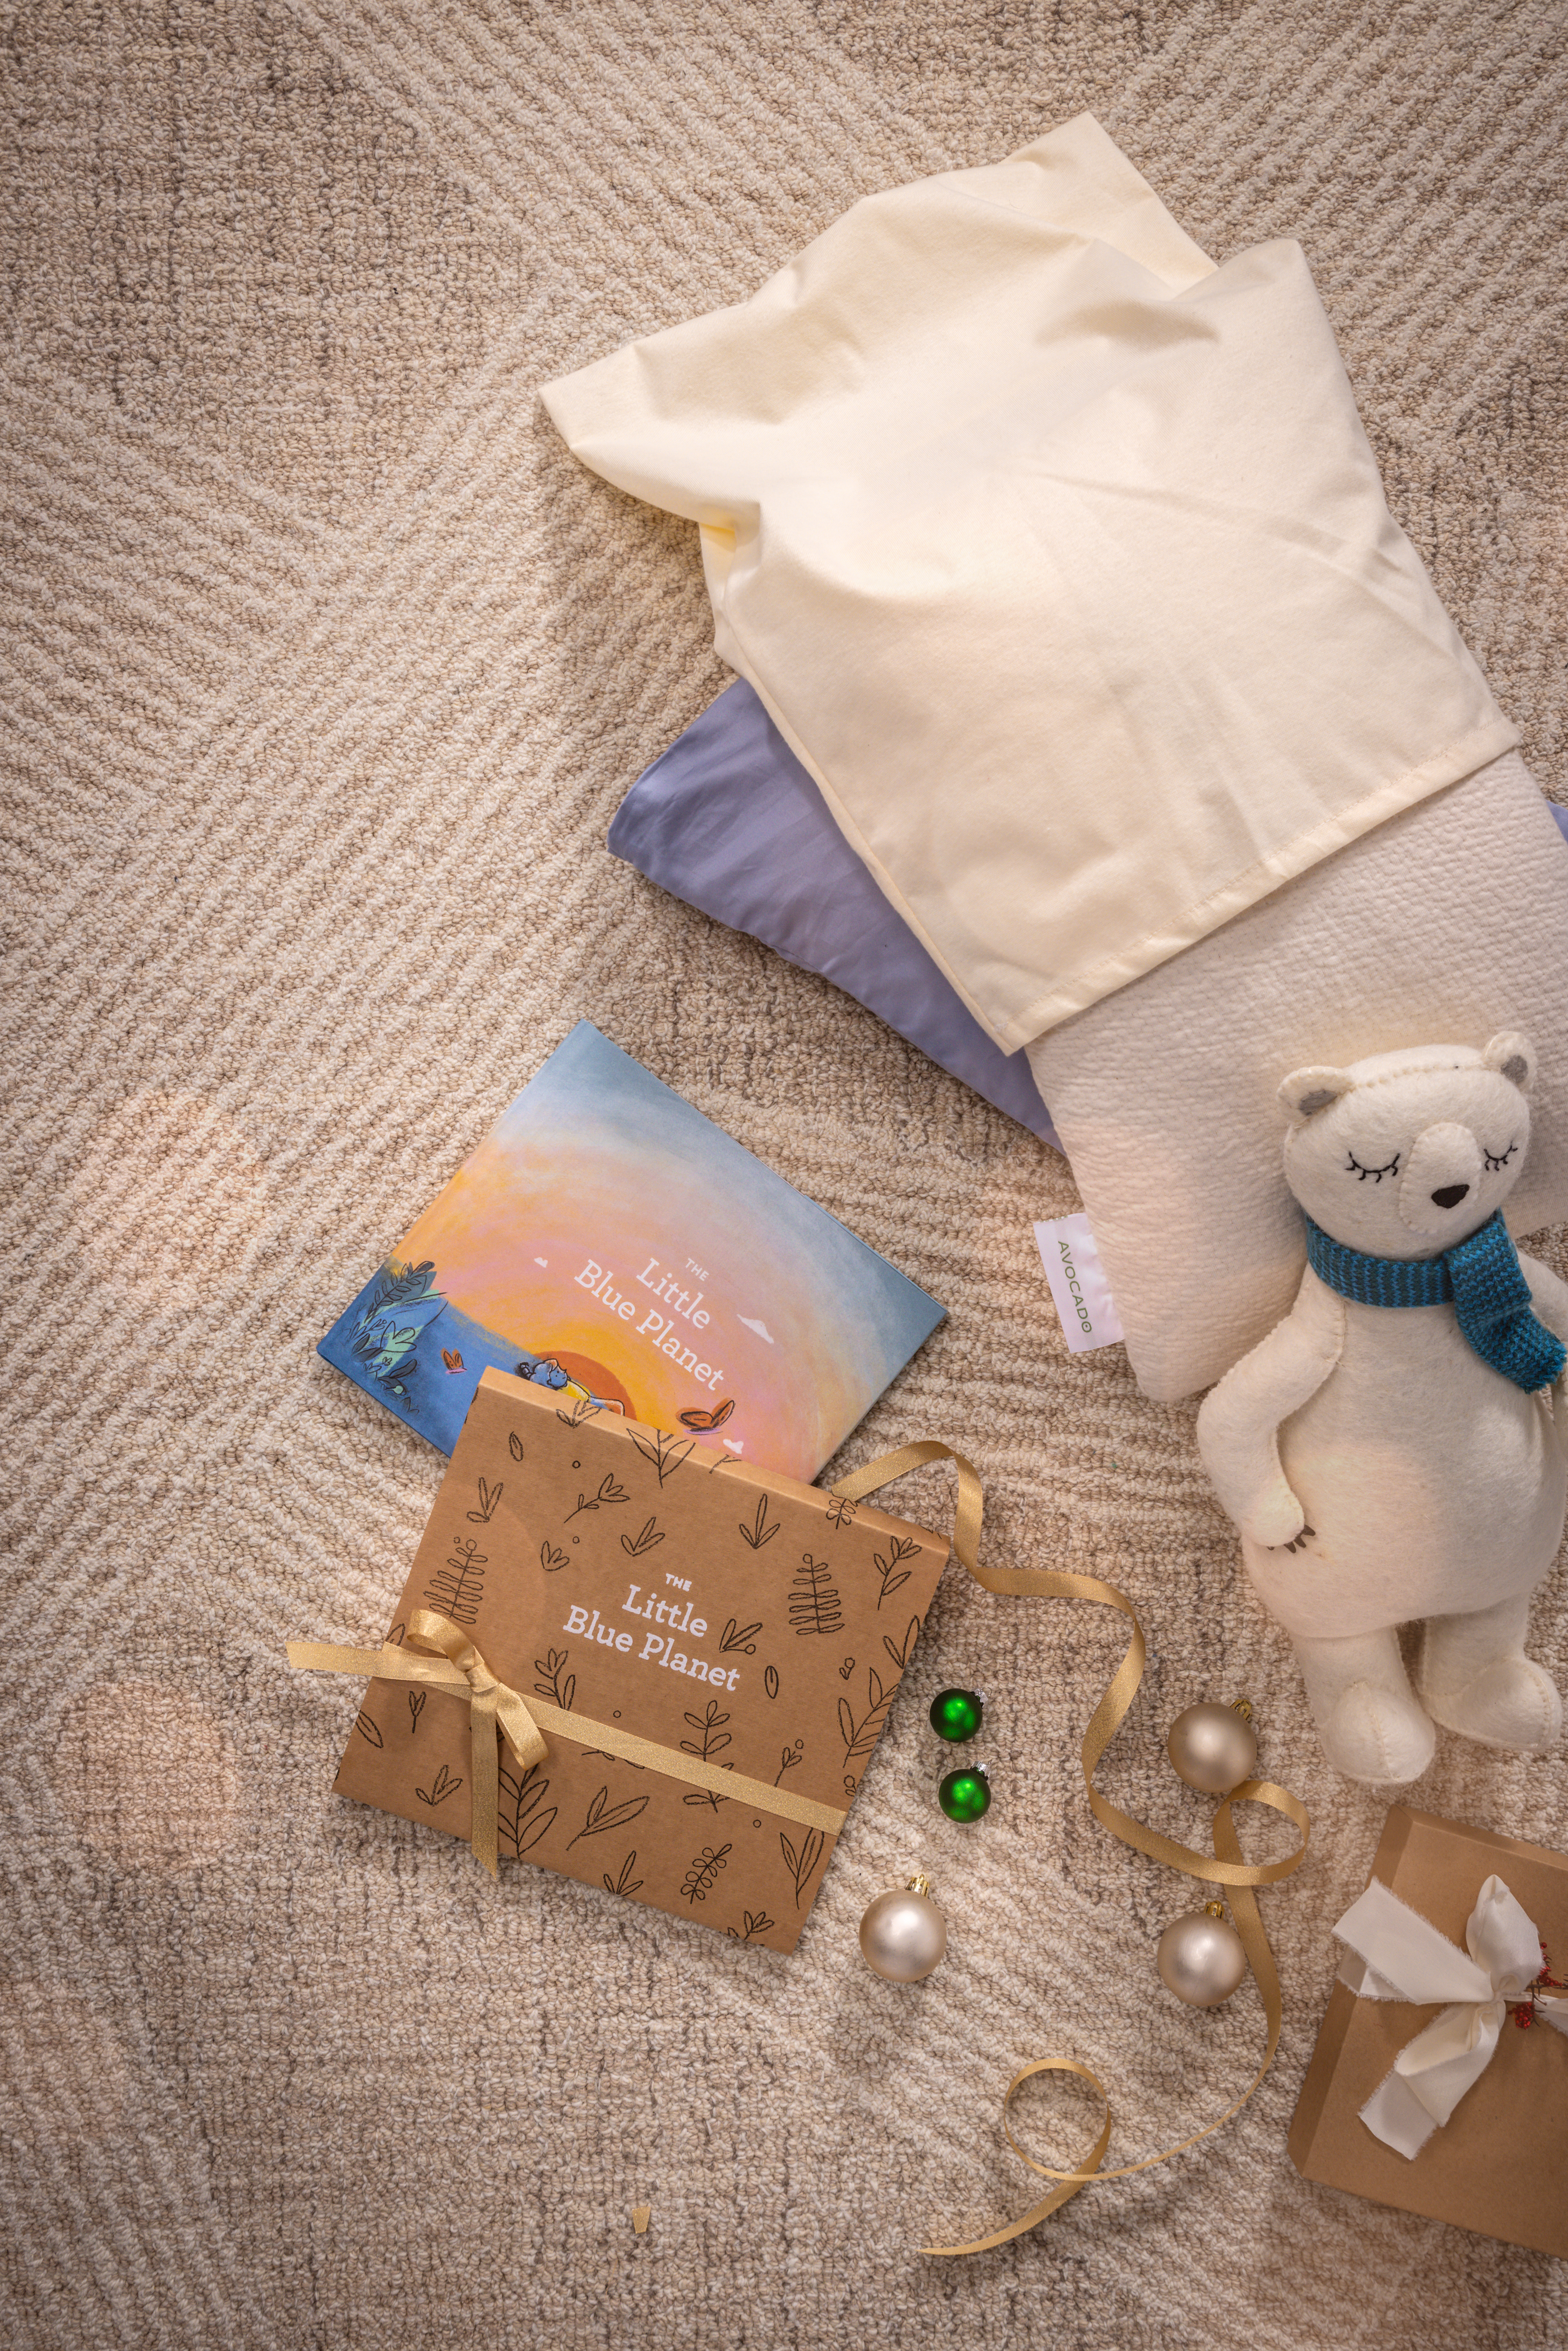 Toddler Pillow, Toddler Pillow Protector, Mini Pillow Case, Little Blue Planet Book